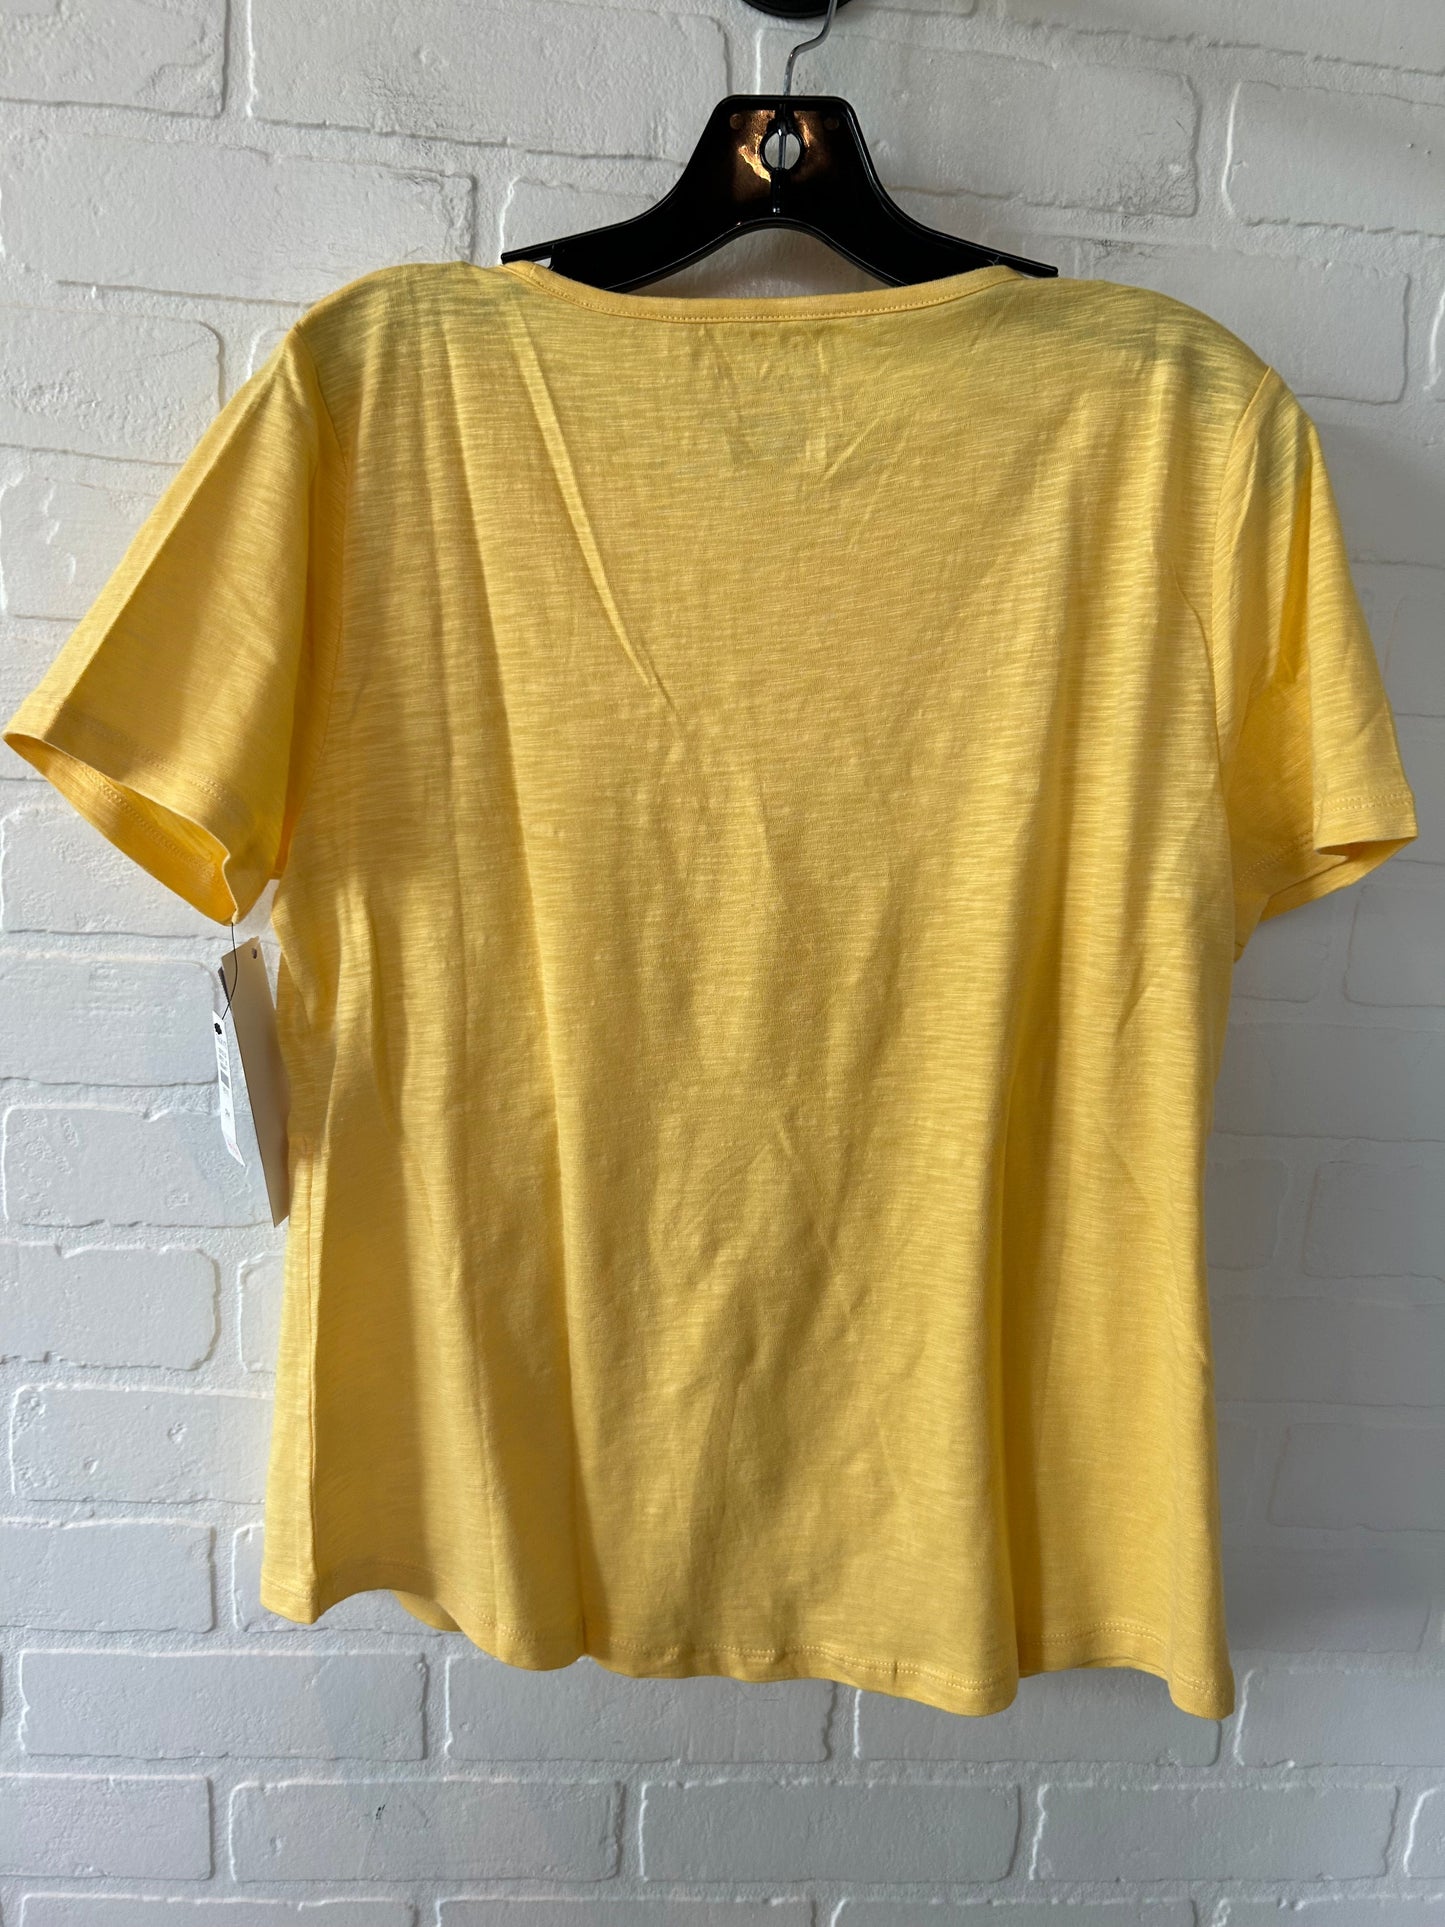 Yellow Top Short Sleeve Basic Talbots, Size M